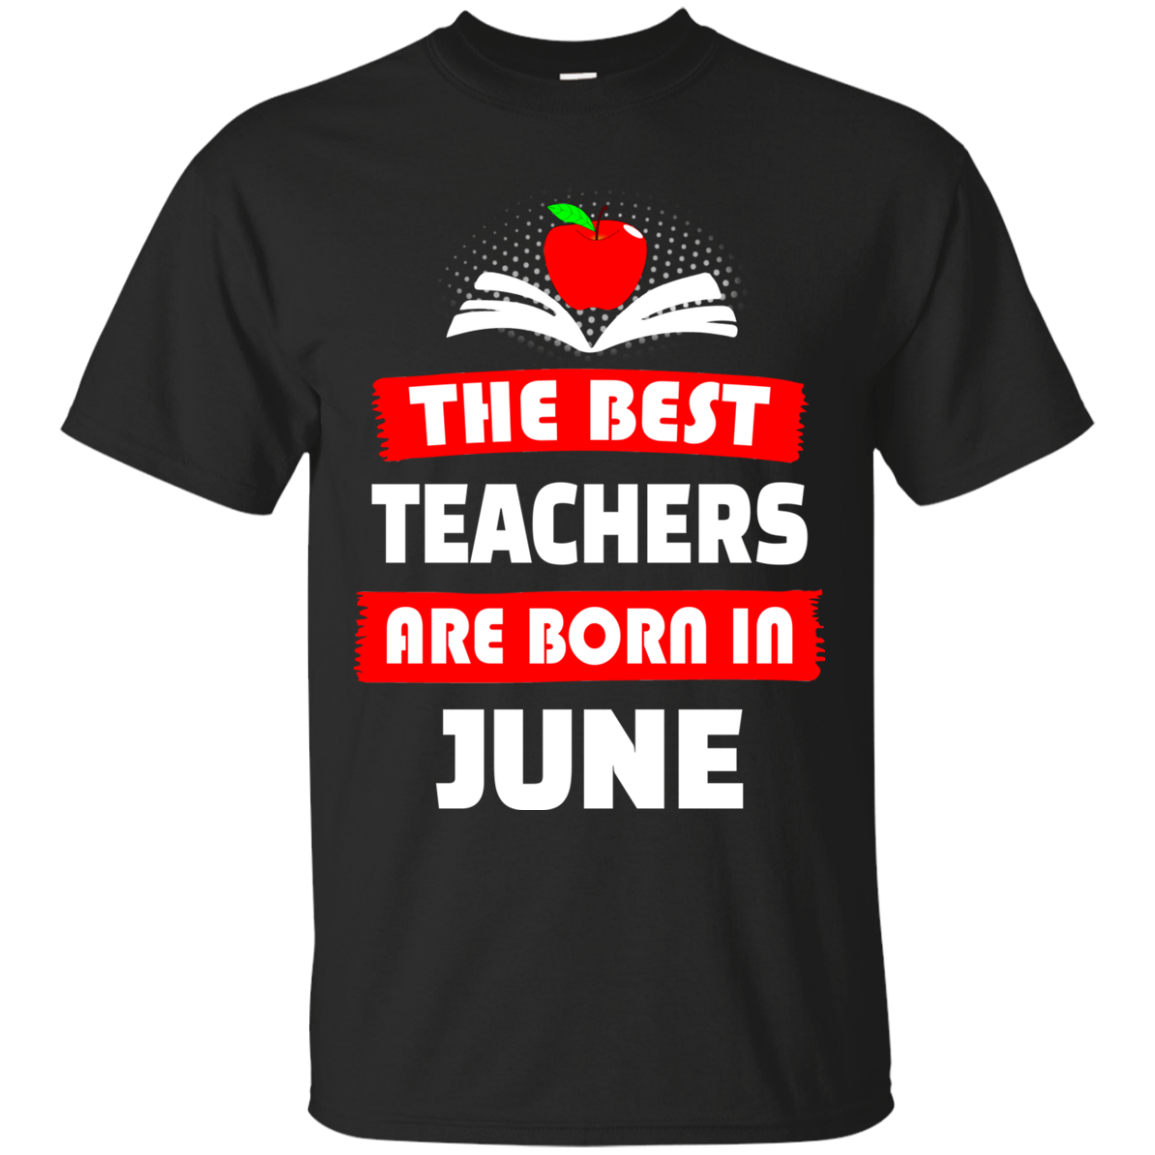 The best teachers are born in June shirt, tank, hoodie